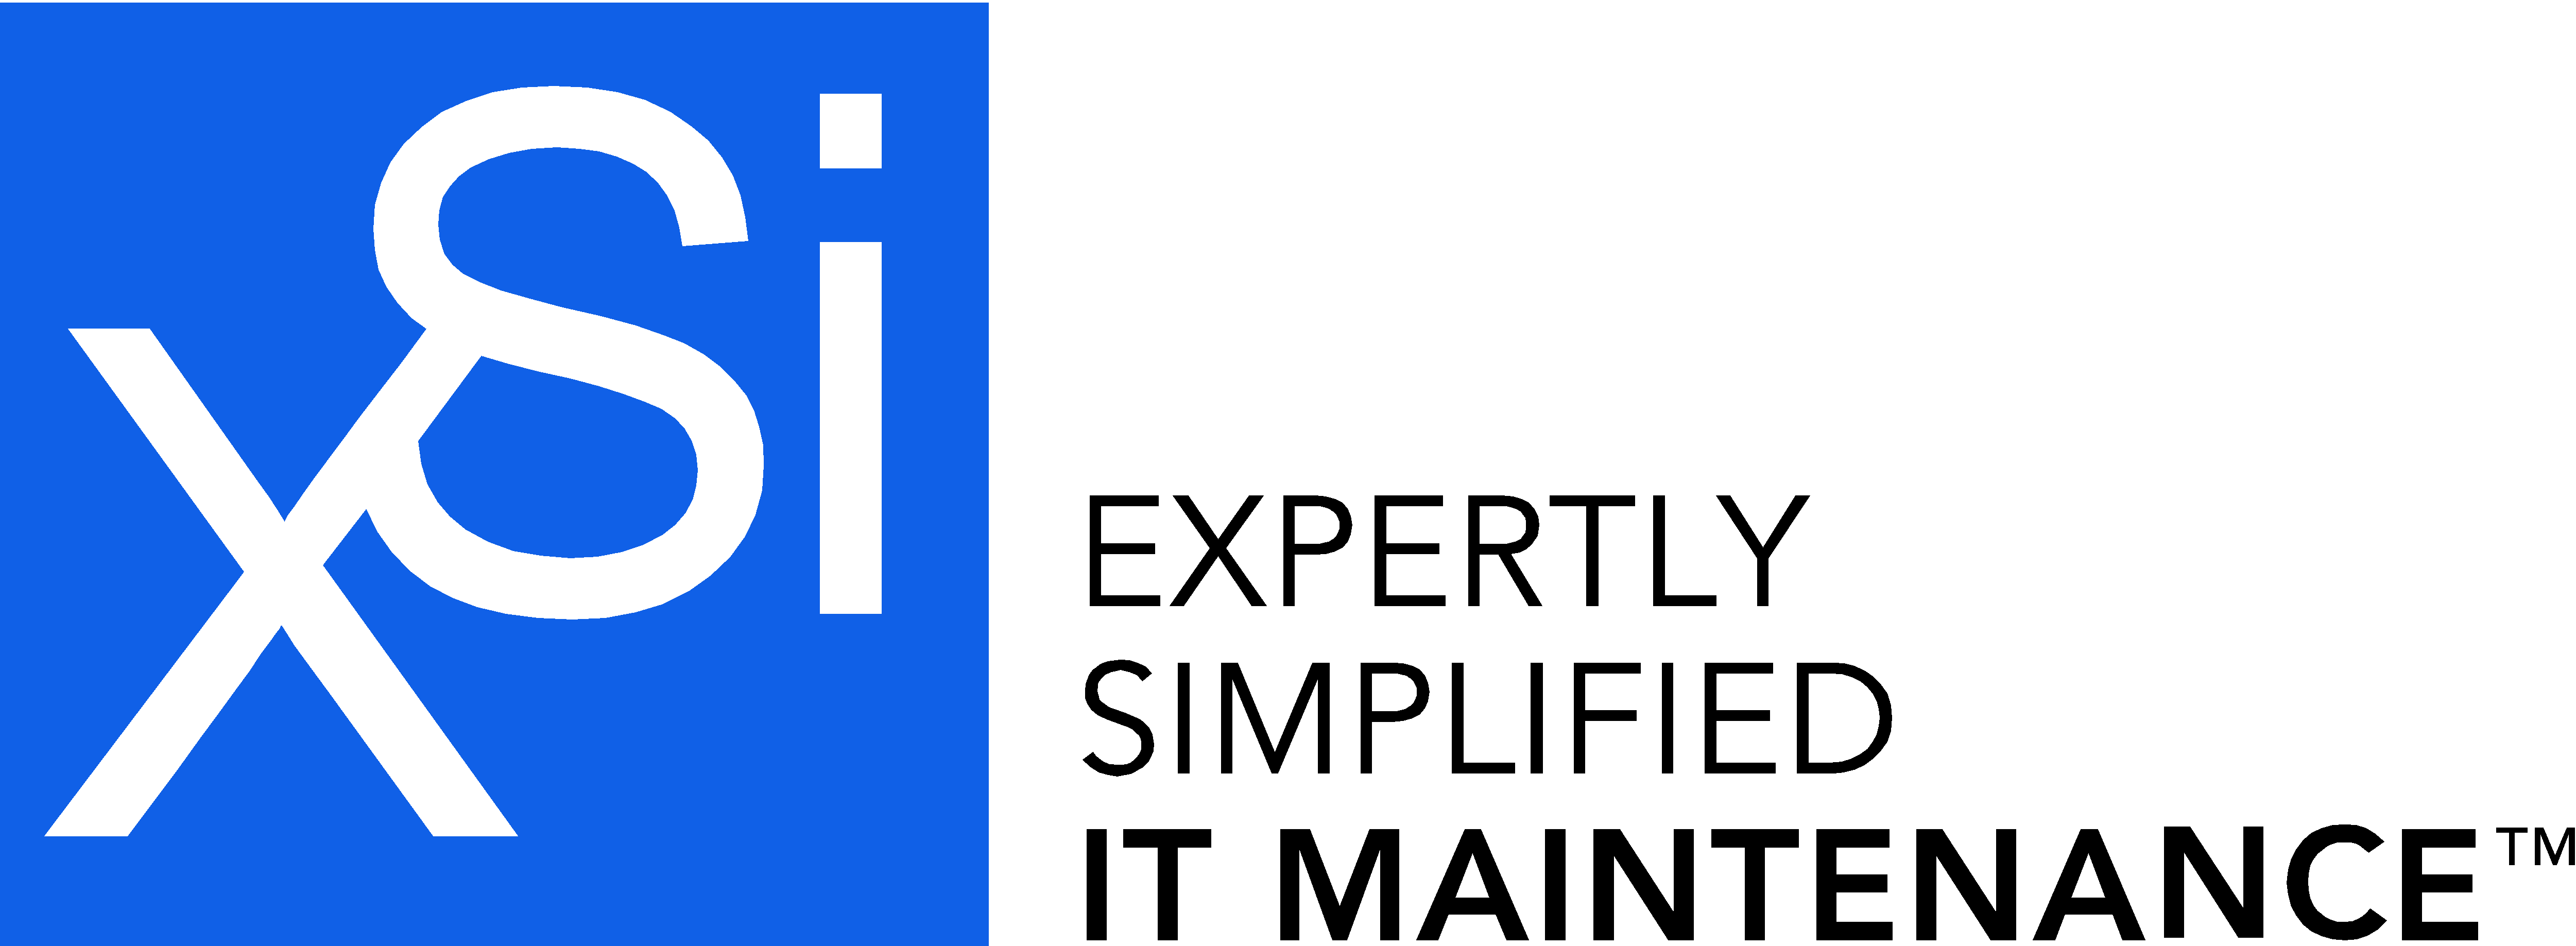 XSI logo